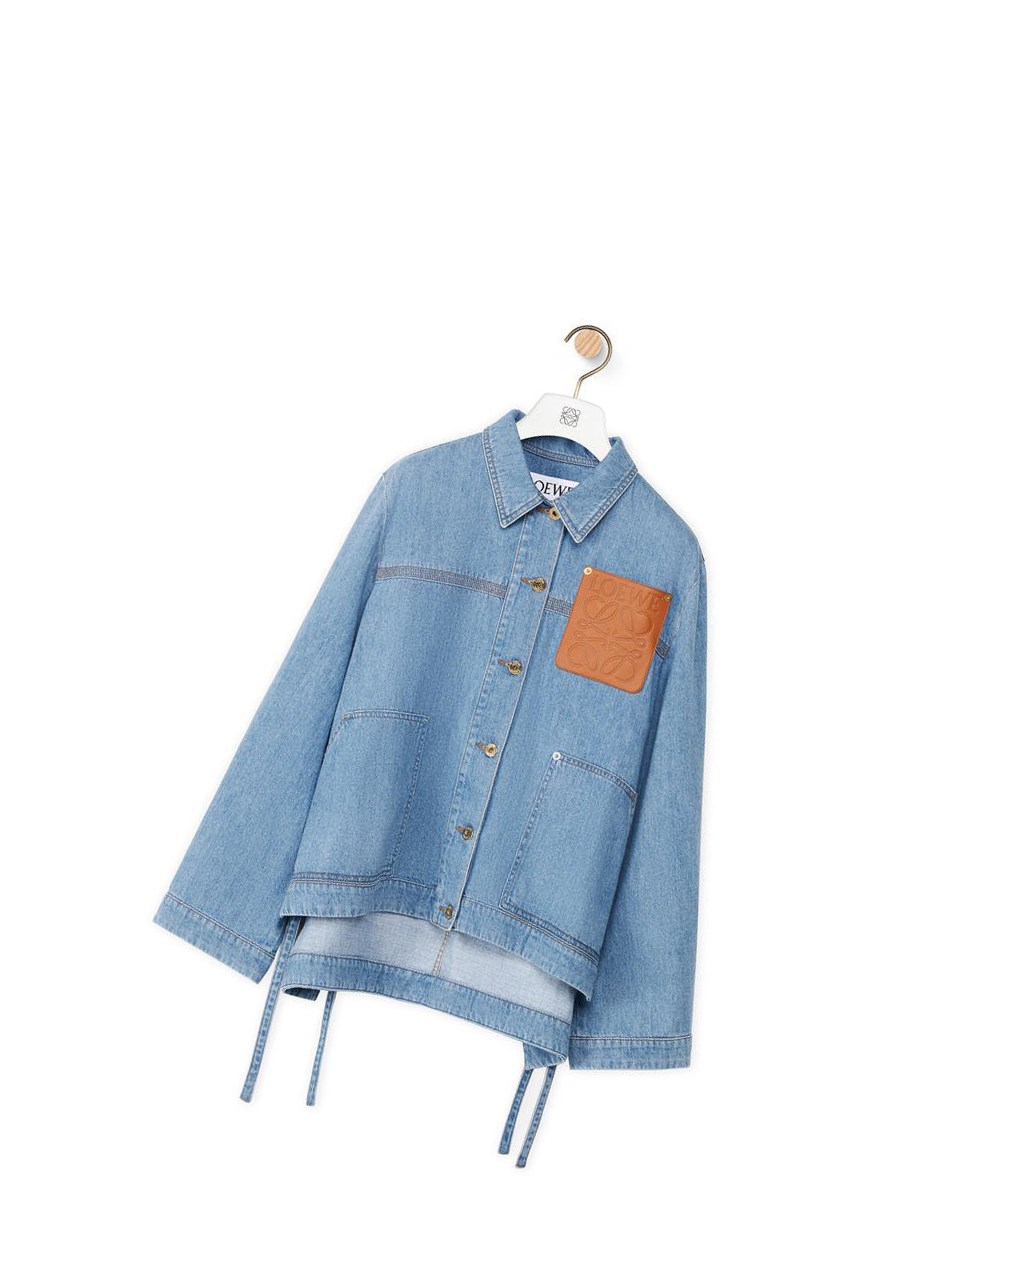 Loewe Workwear jacket in denim Light Blue | IH6309271